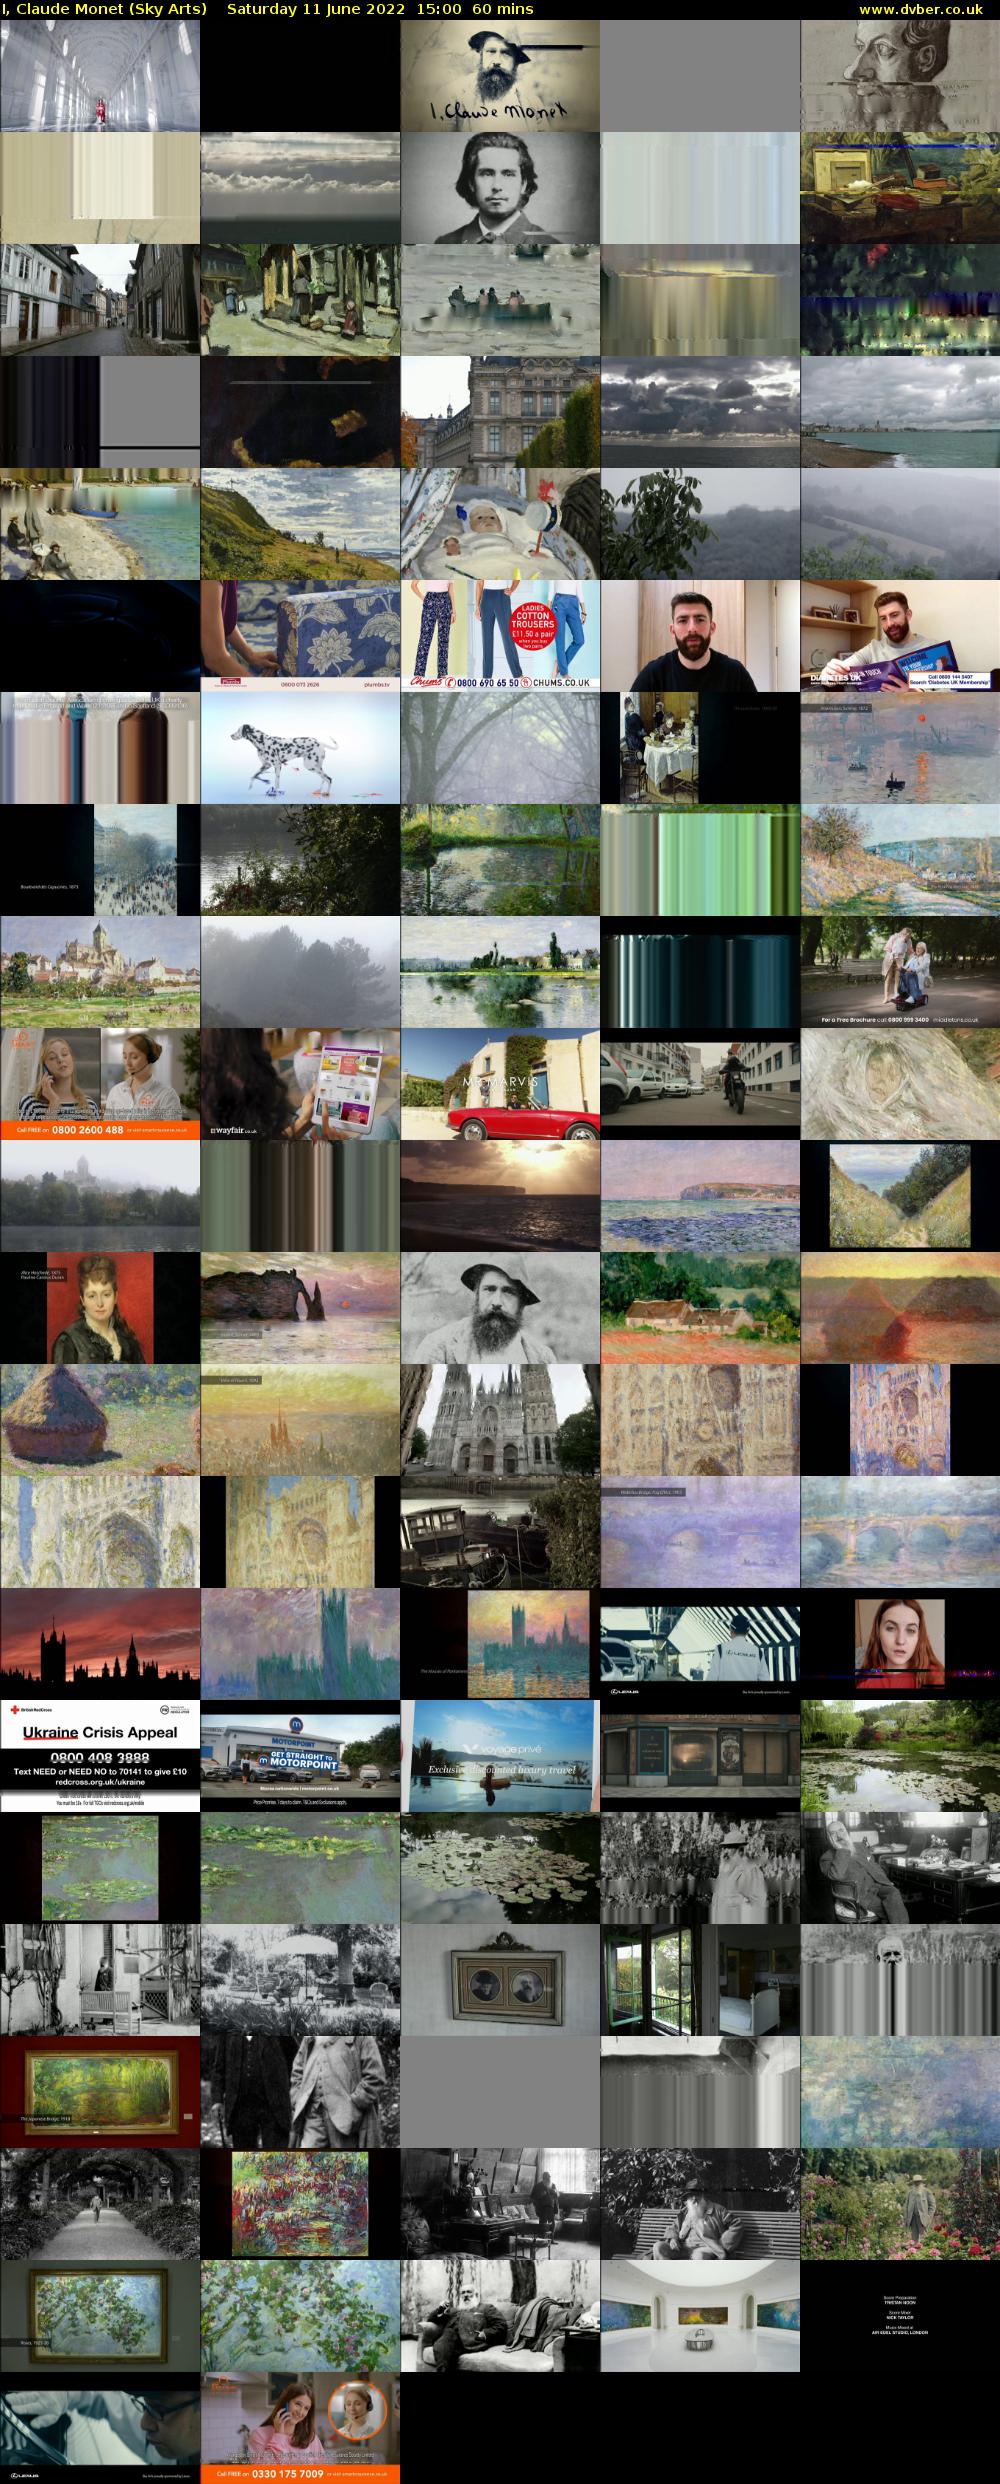 I, Claude Monet (Sky Arts) Saturday 11 June 2022 15:00 - 16:00